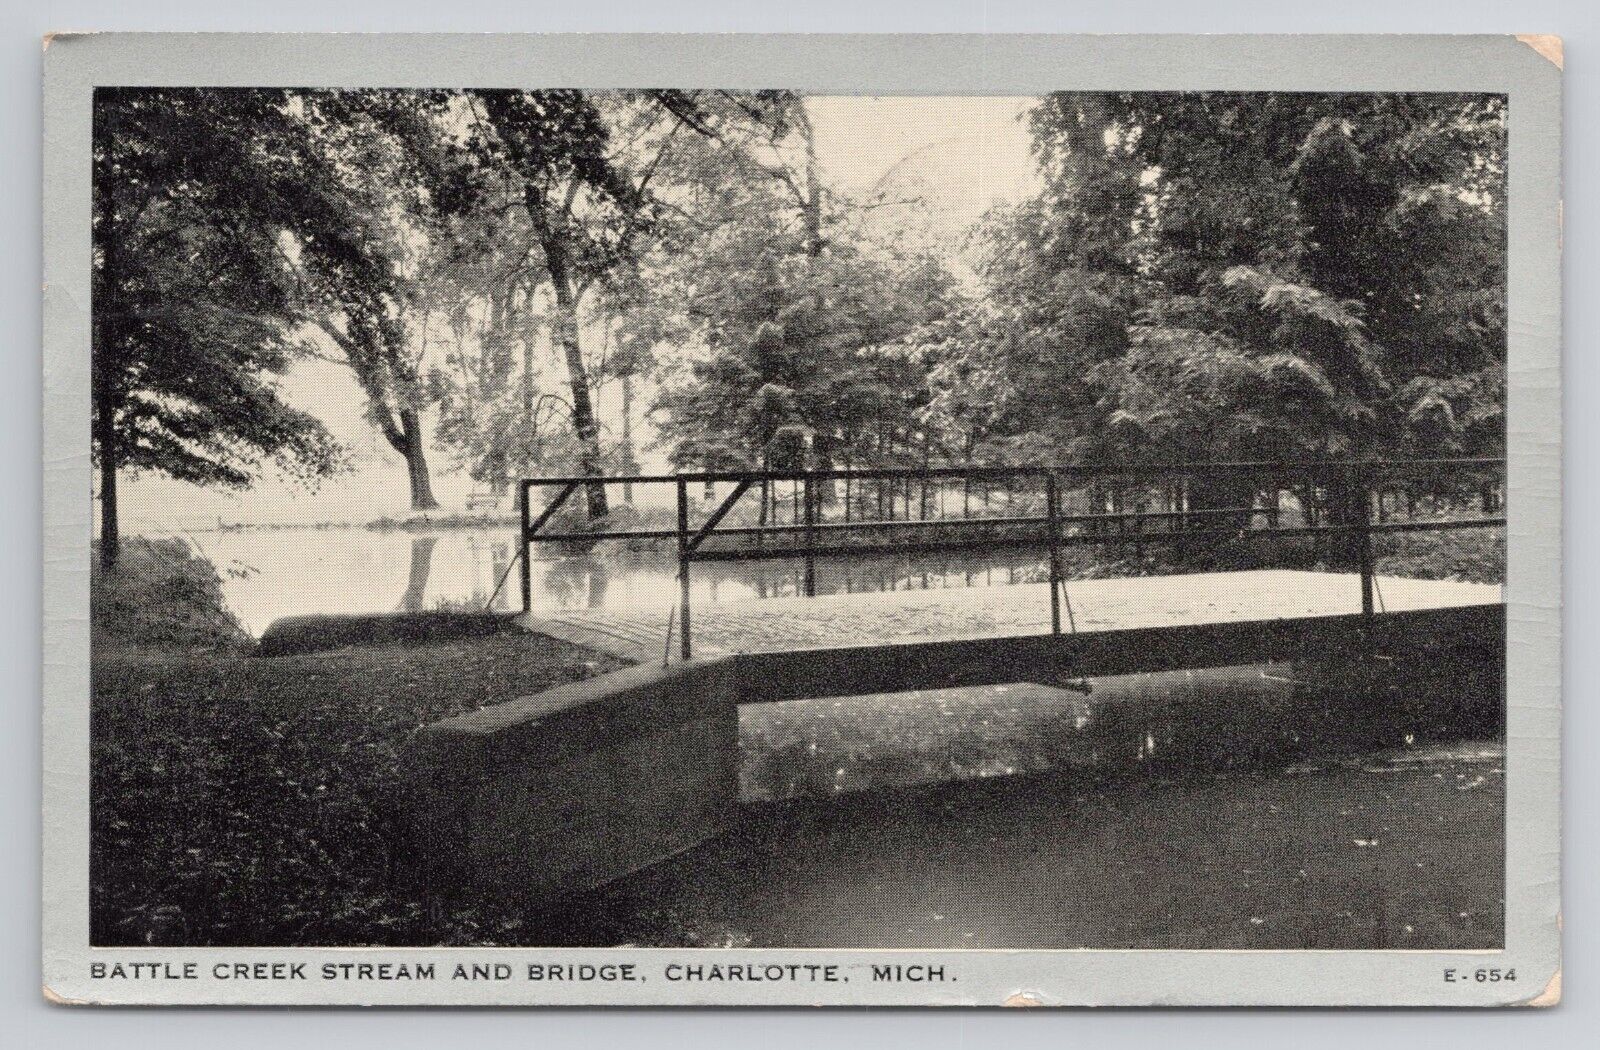 Battle Creek Stream And Bridge, Charlotte, Mich Postcard 1657